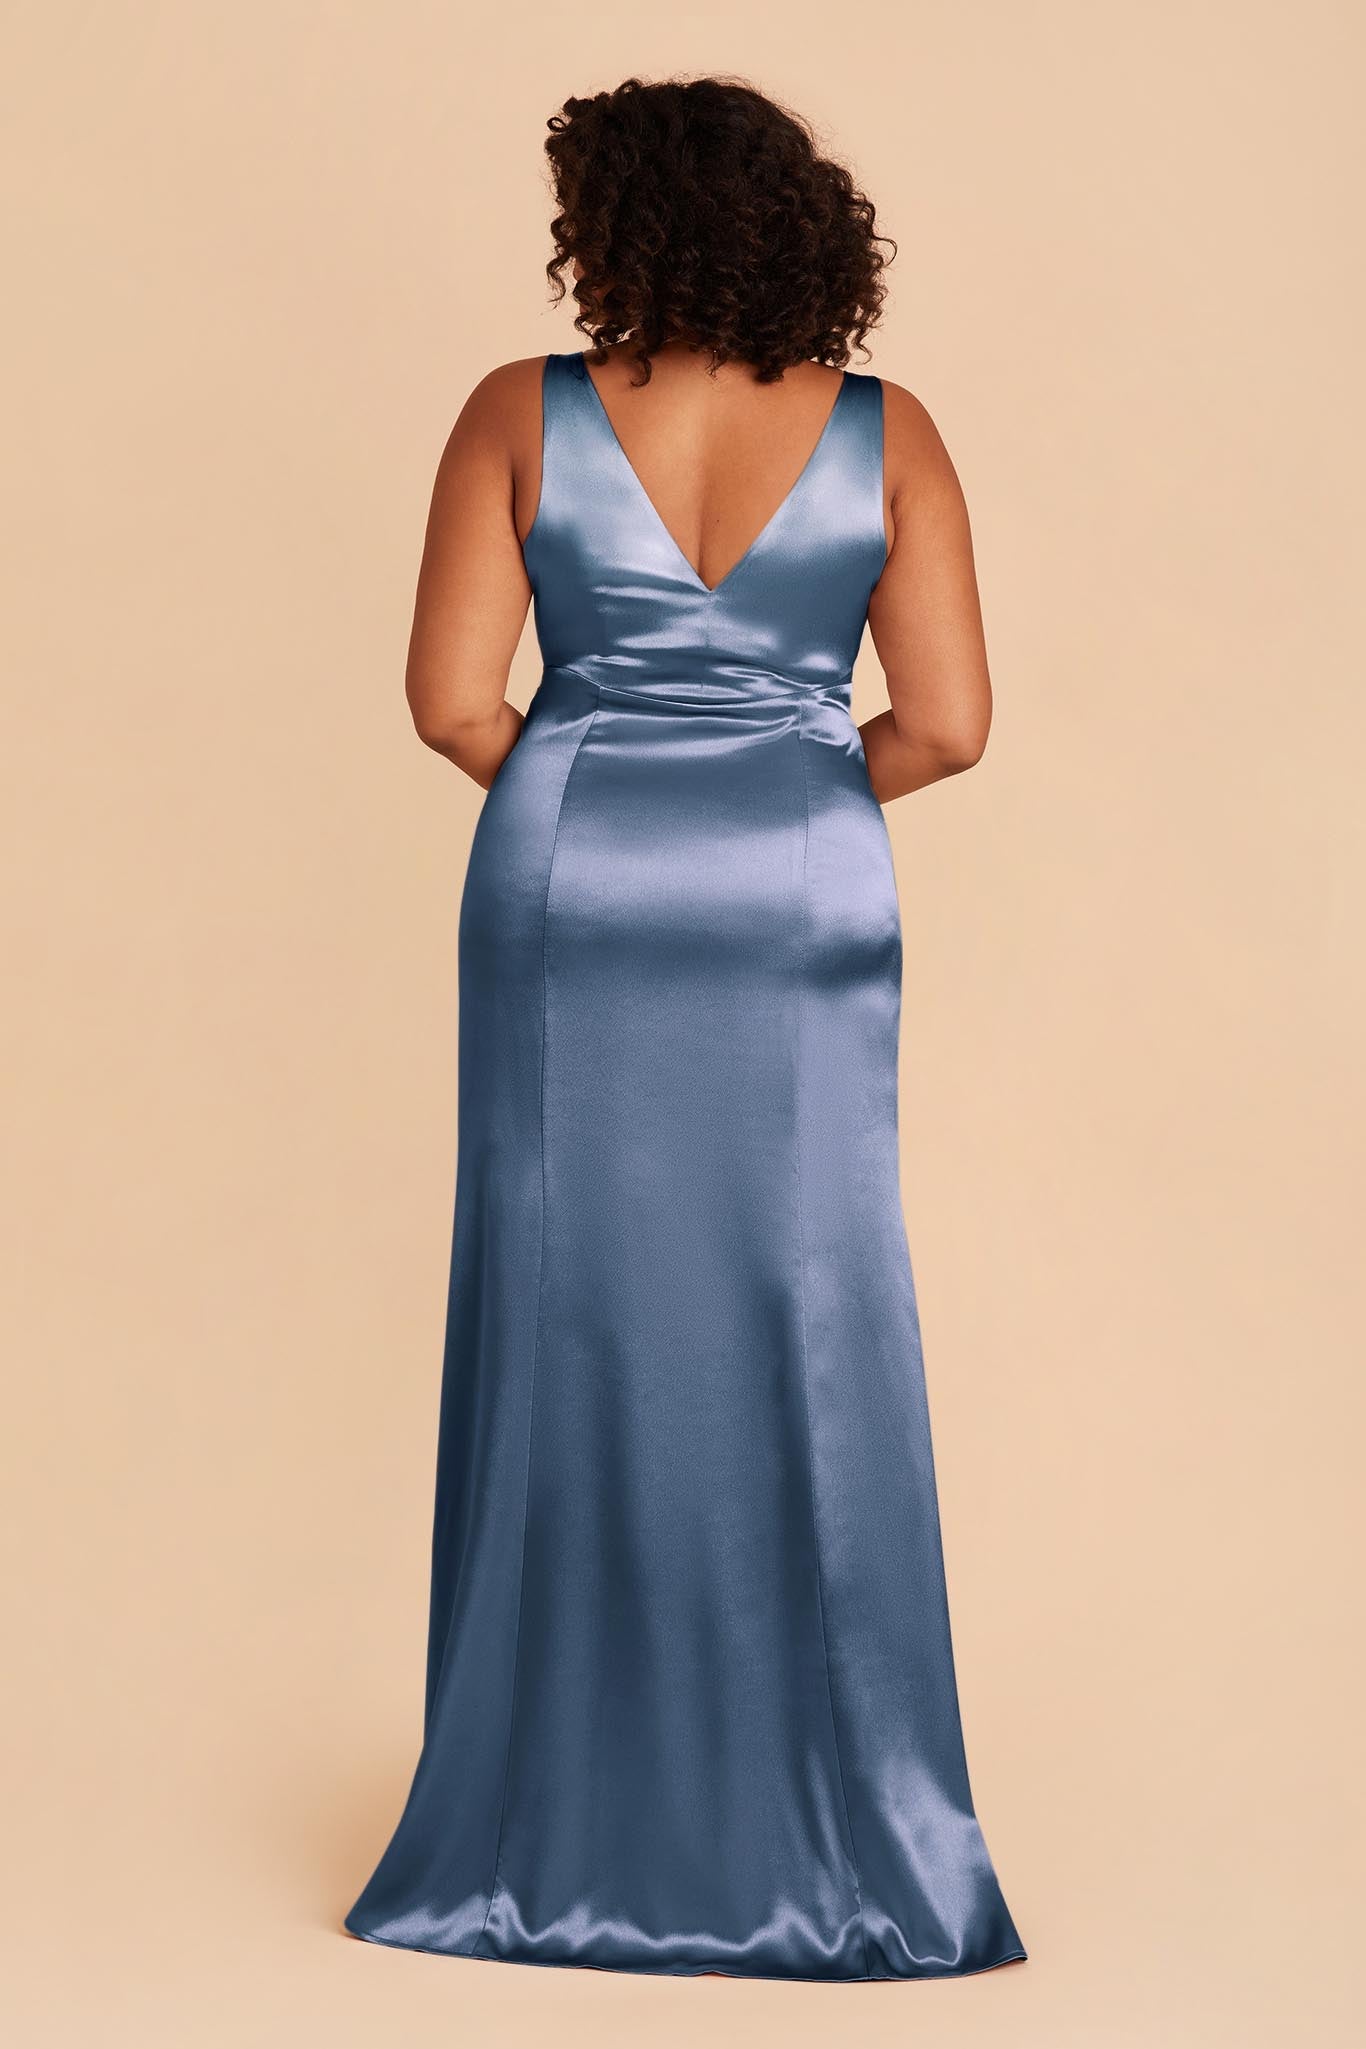 Wildwood Wrap Dress Pattern (Sizes 18-34) – Brooklyn Craft Company